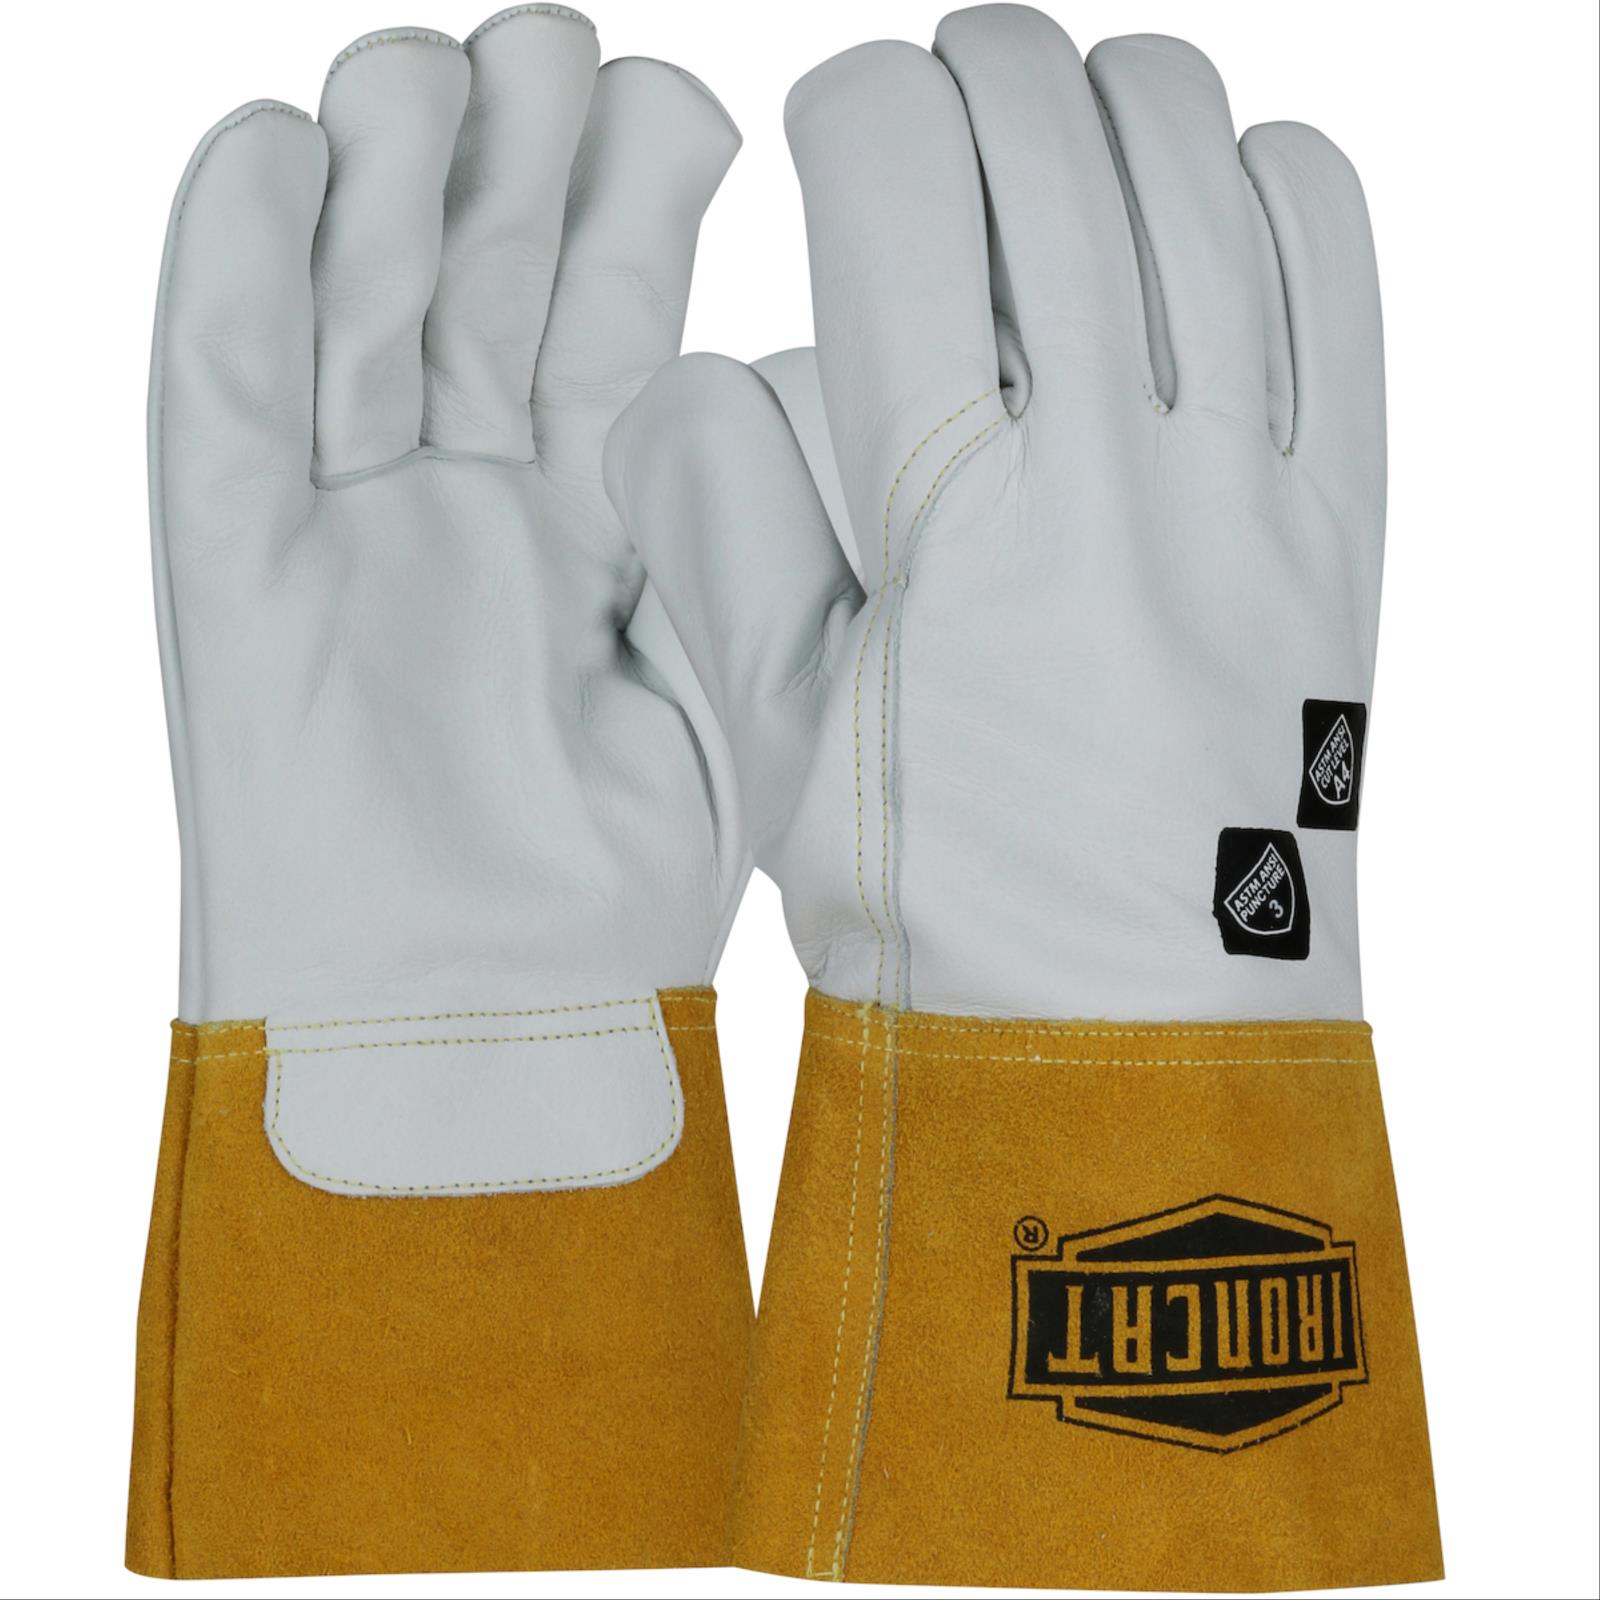 Ironcat® Top Grain Cowhide Leather Mig Welder Glove, Cut Level A4